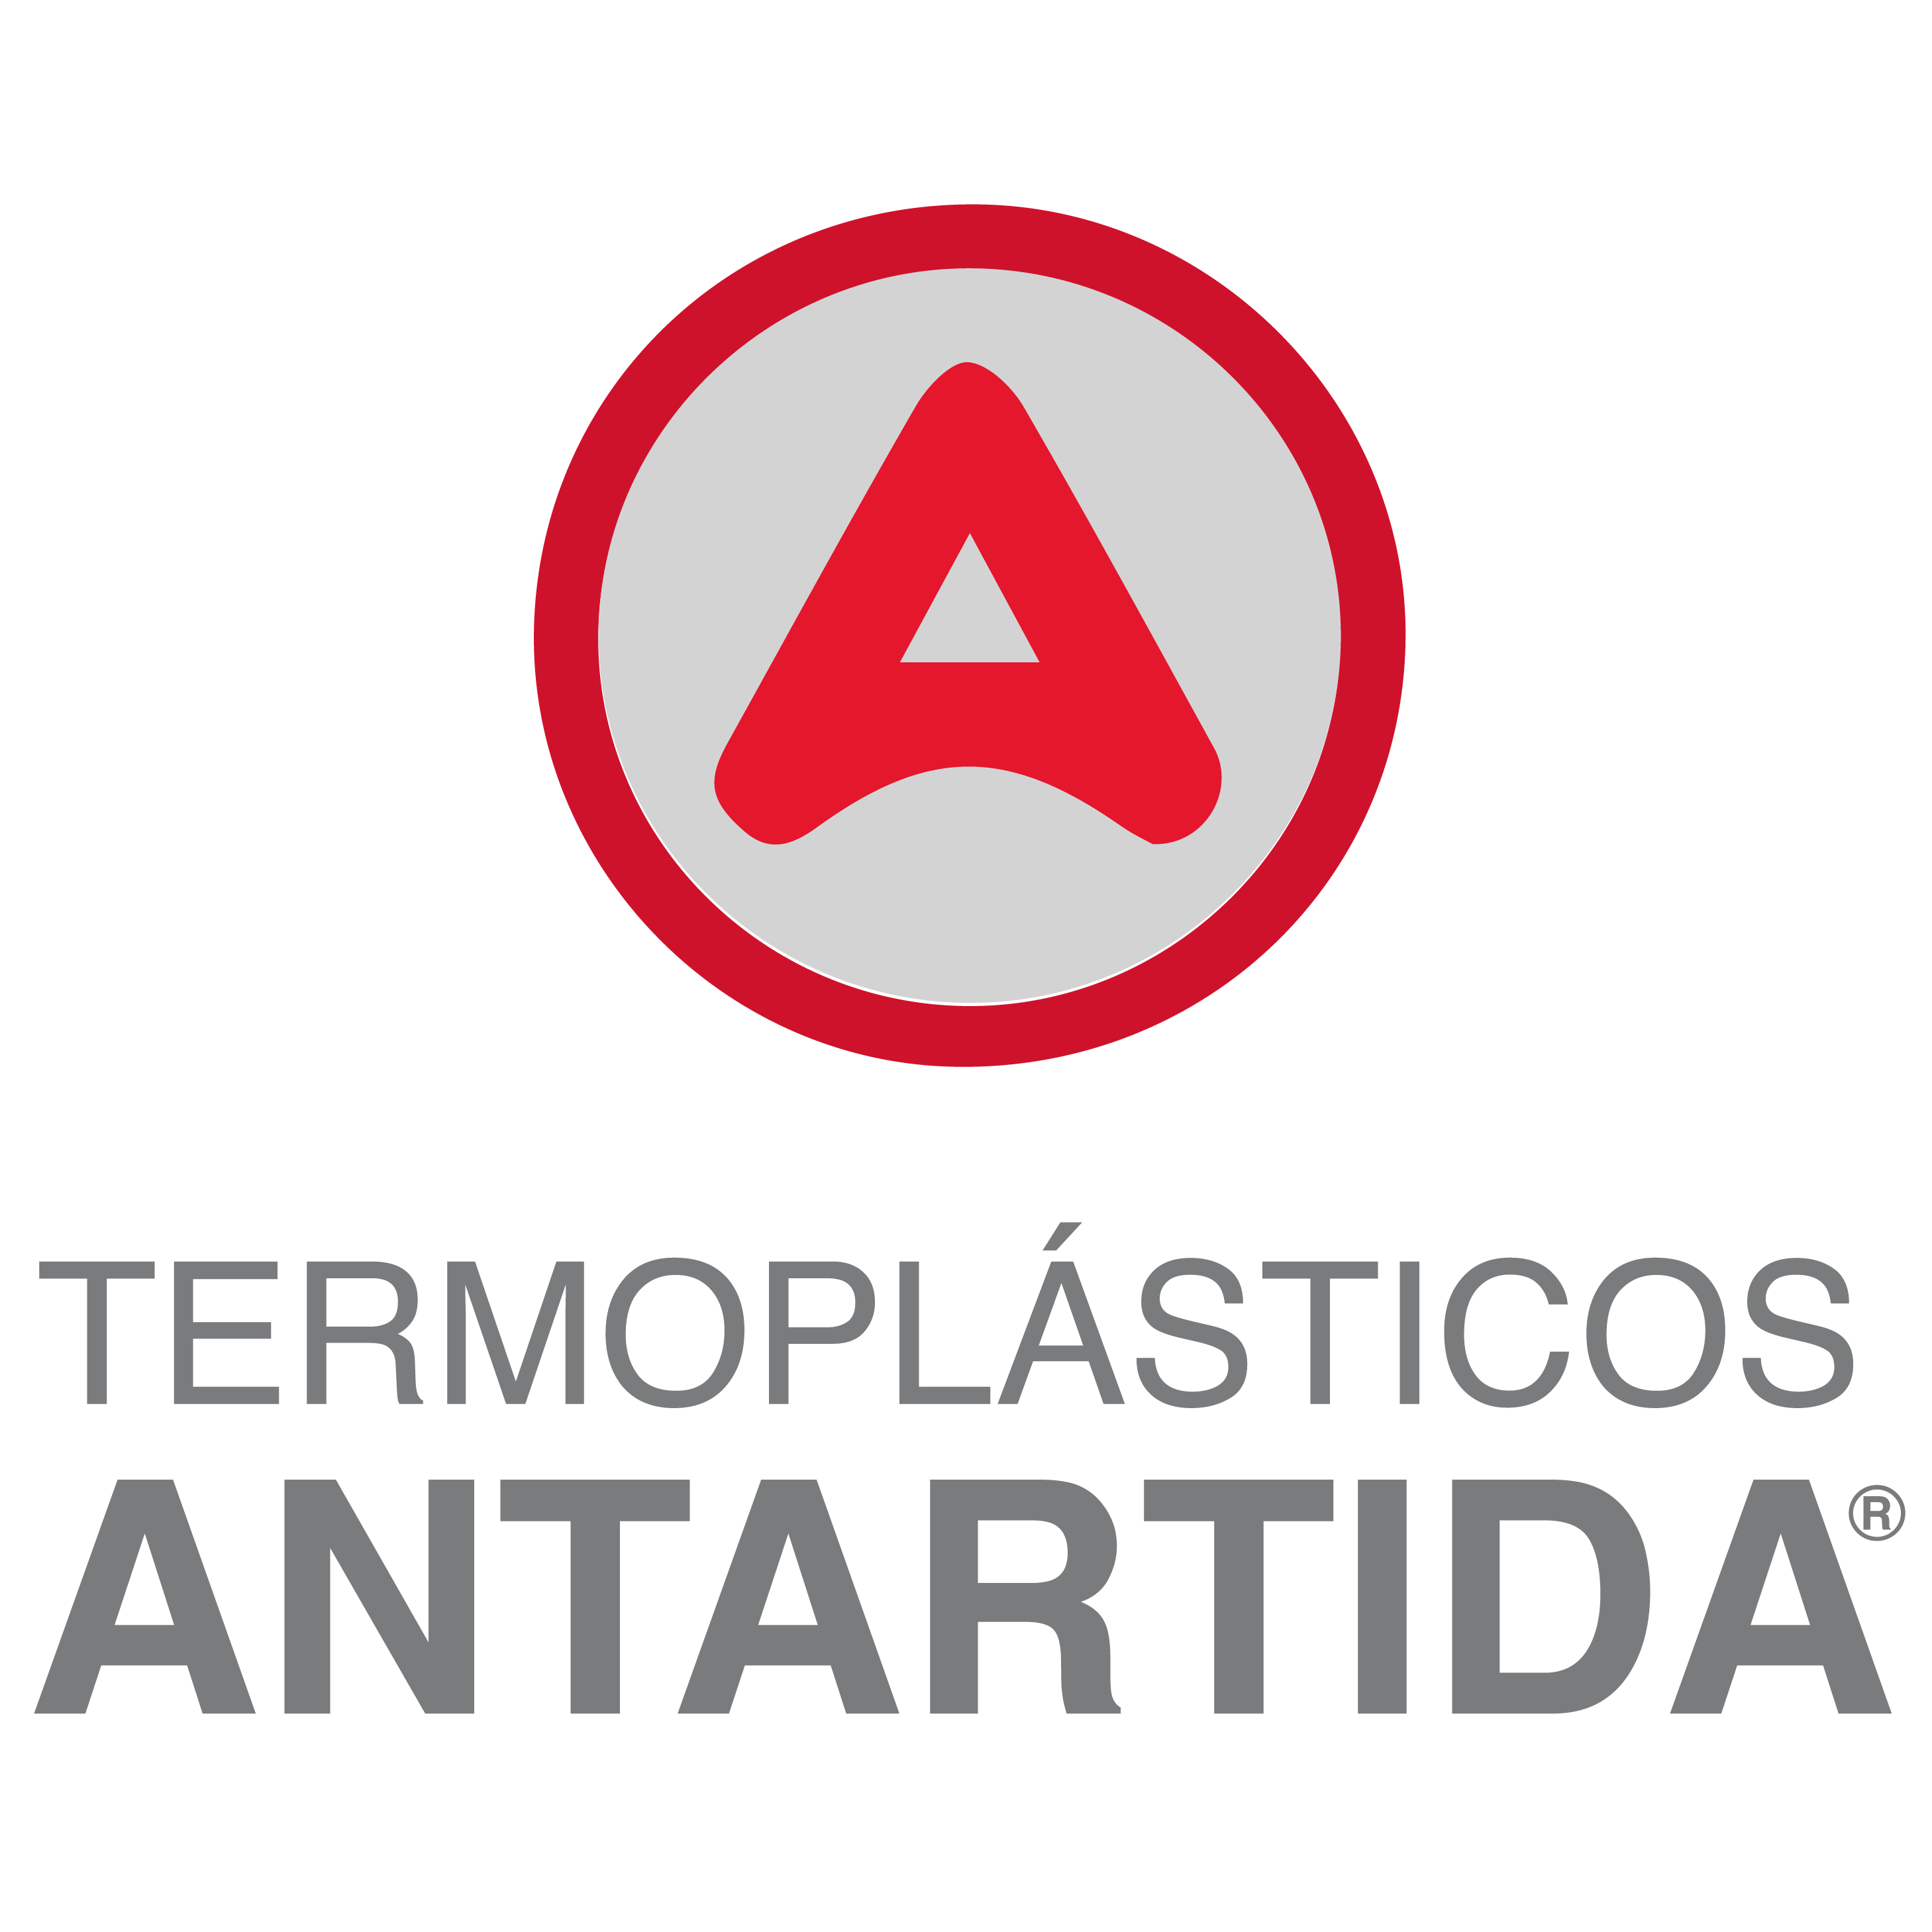 Termoplasticos Antartida S.A. 